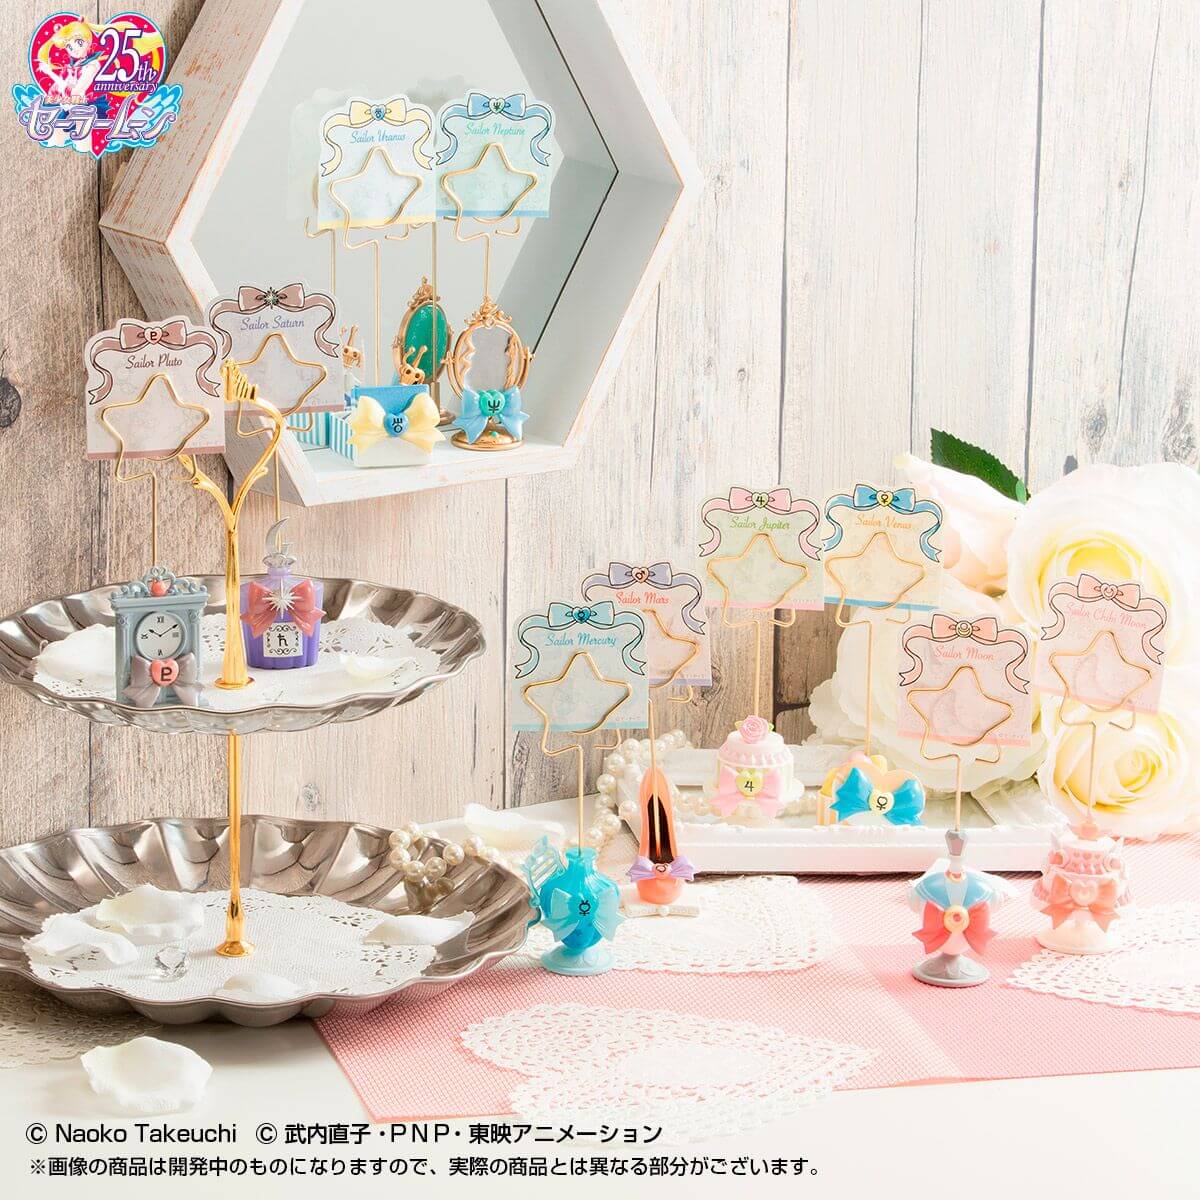 “Bishojo Senshi Sailor Moon’s” card stands